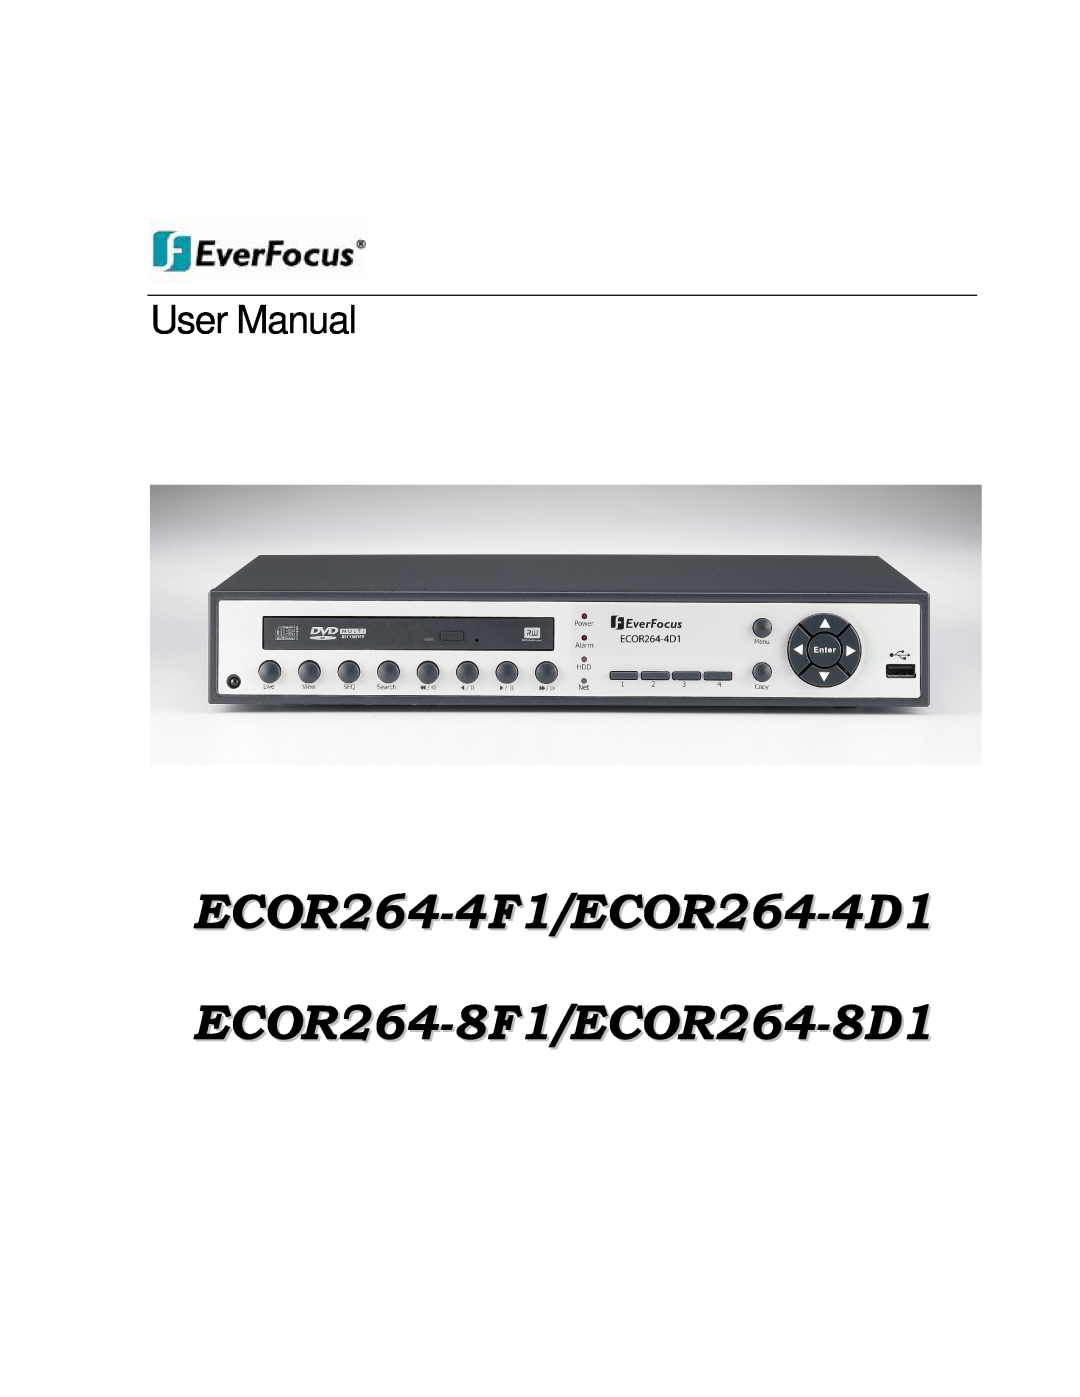 EverFocus user manual ECOR264-4F1/ECOR264-4D1 ECOR264-8F1/ECOR264-8D1, User Manual 